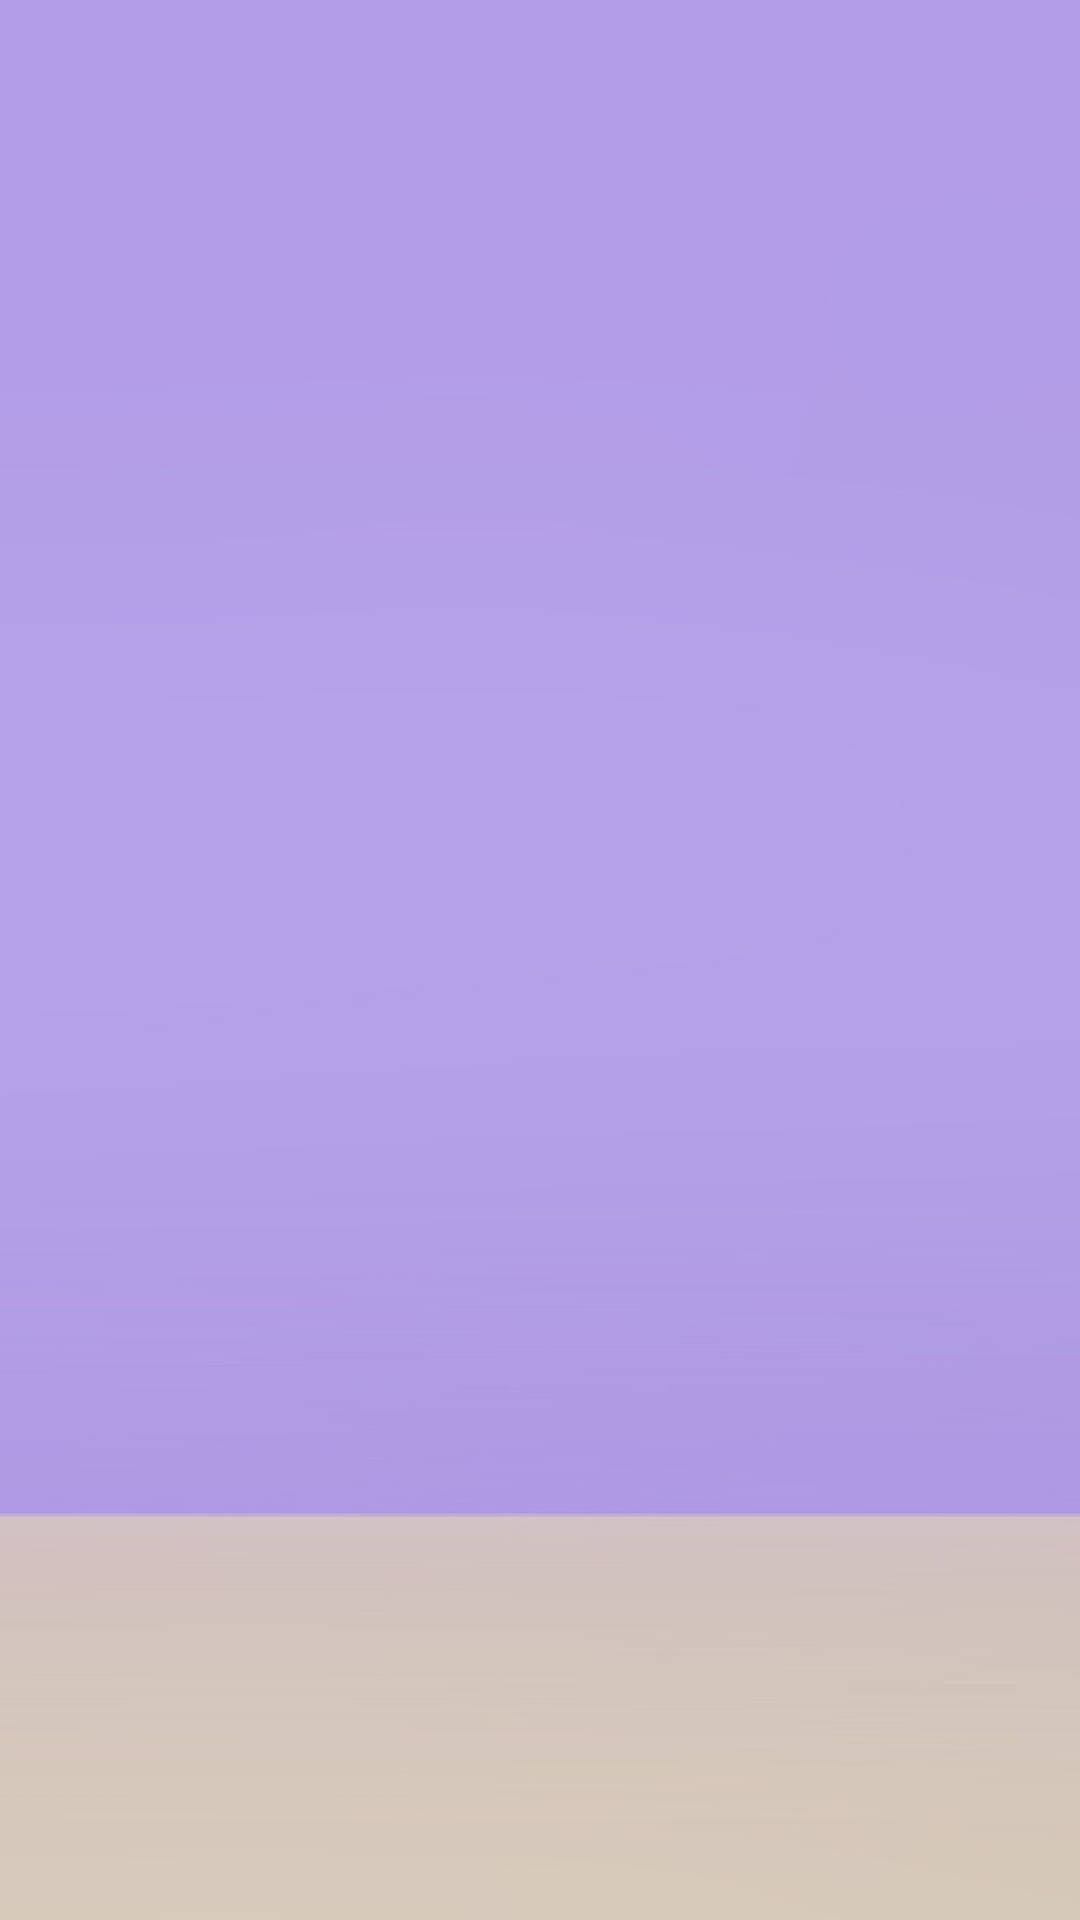 Light Purple Iphone With White Bottom